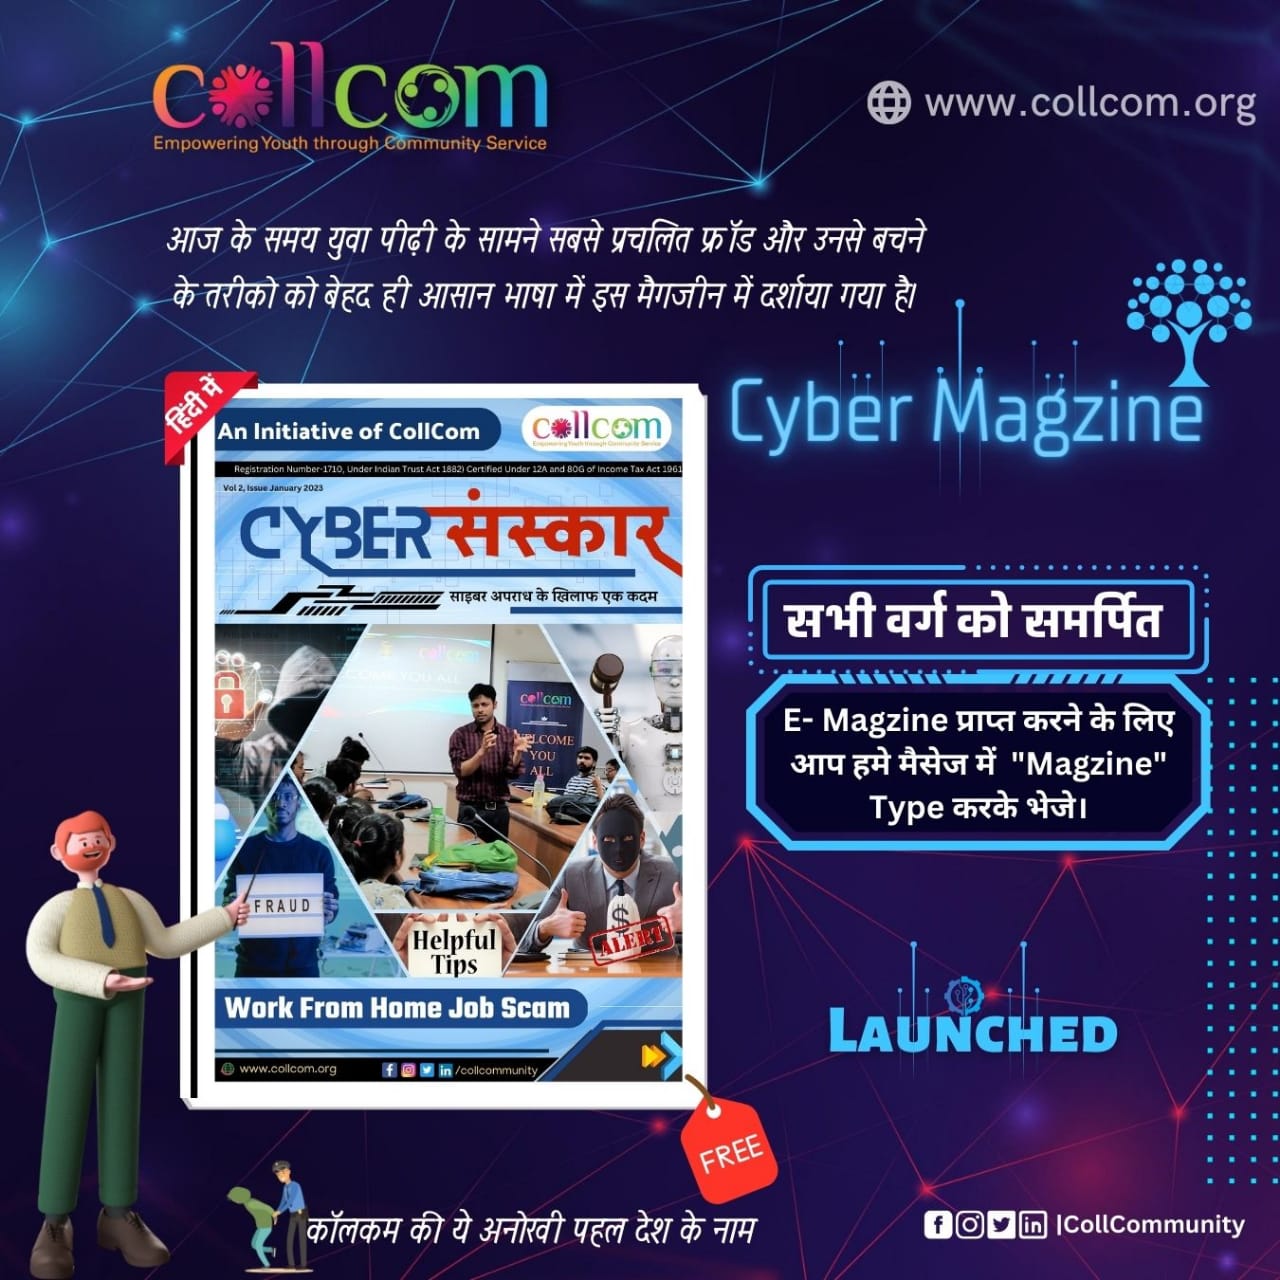 CollCom Cyber Sanskar E Magzine Launched